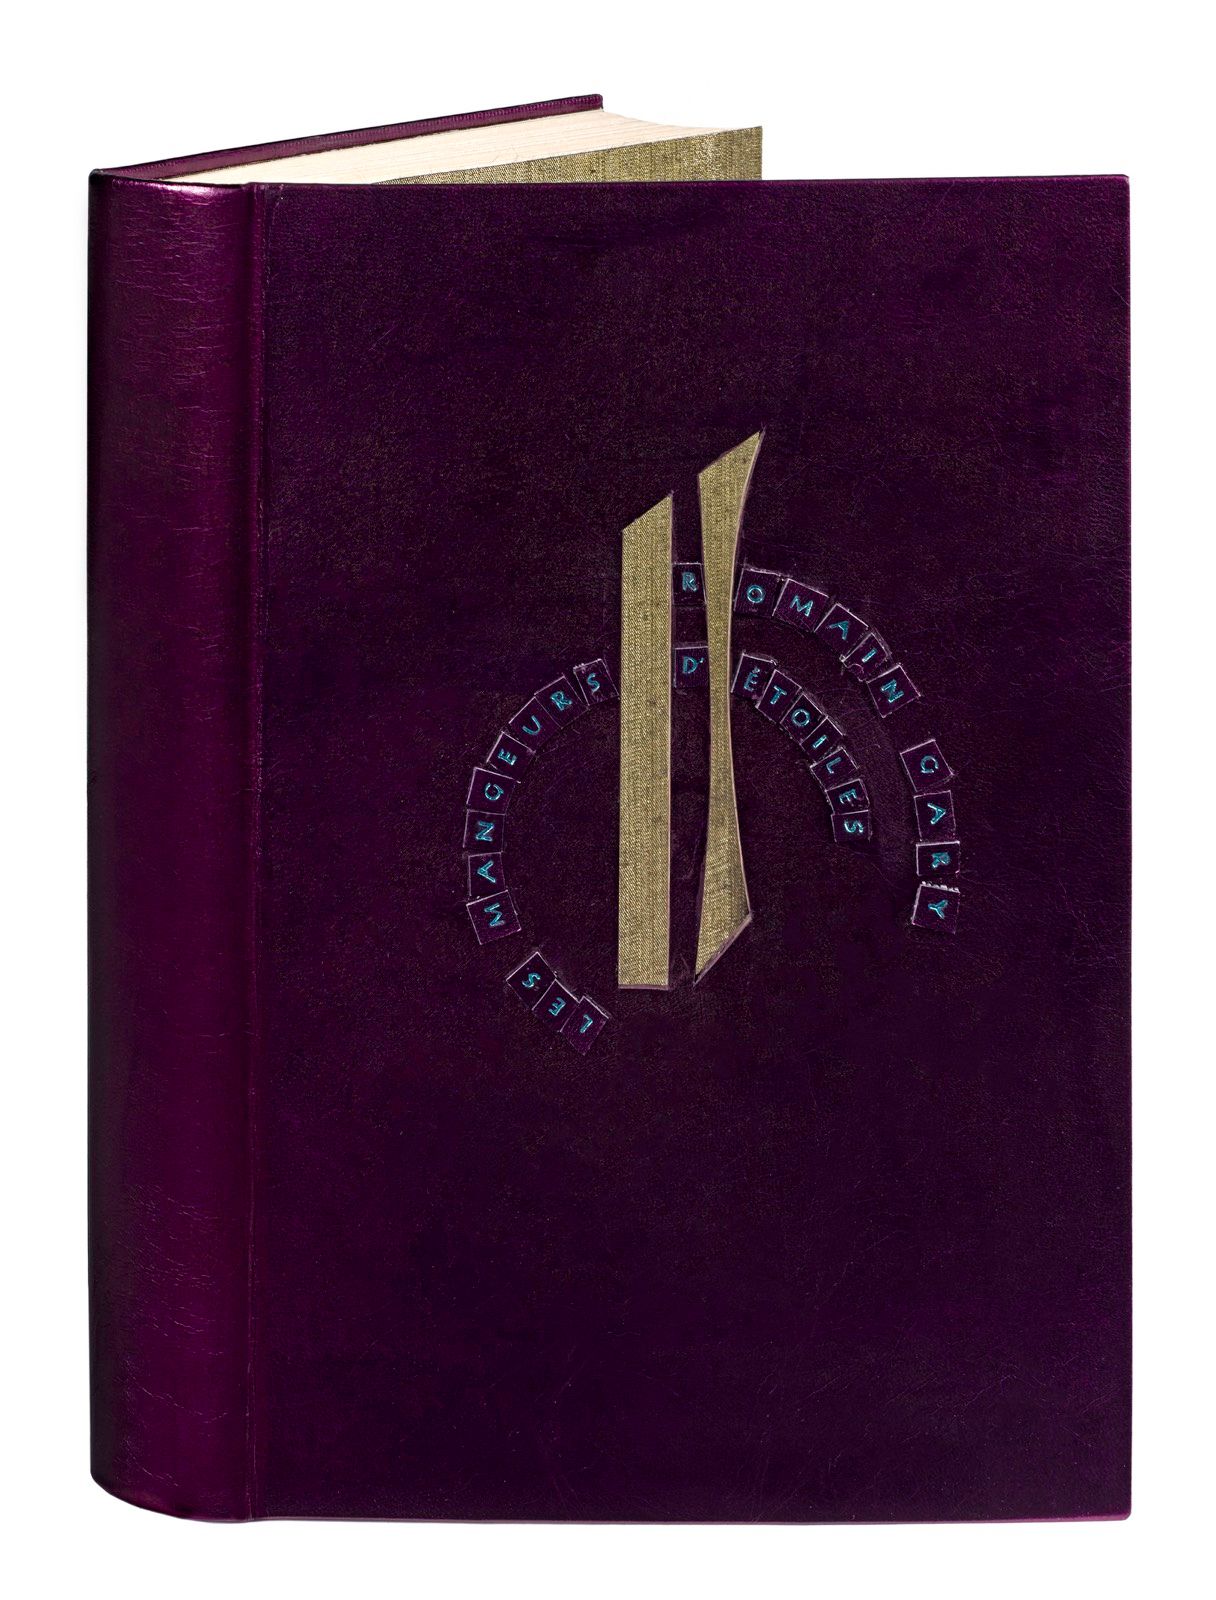 GARY (Romain). Les Mangeurs d'étoiles. Paris, Gallimard, 1966. In-8, irisierende&hellip;